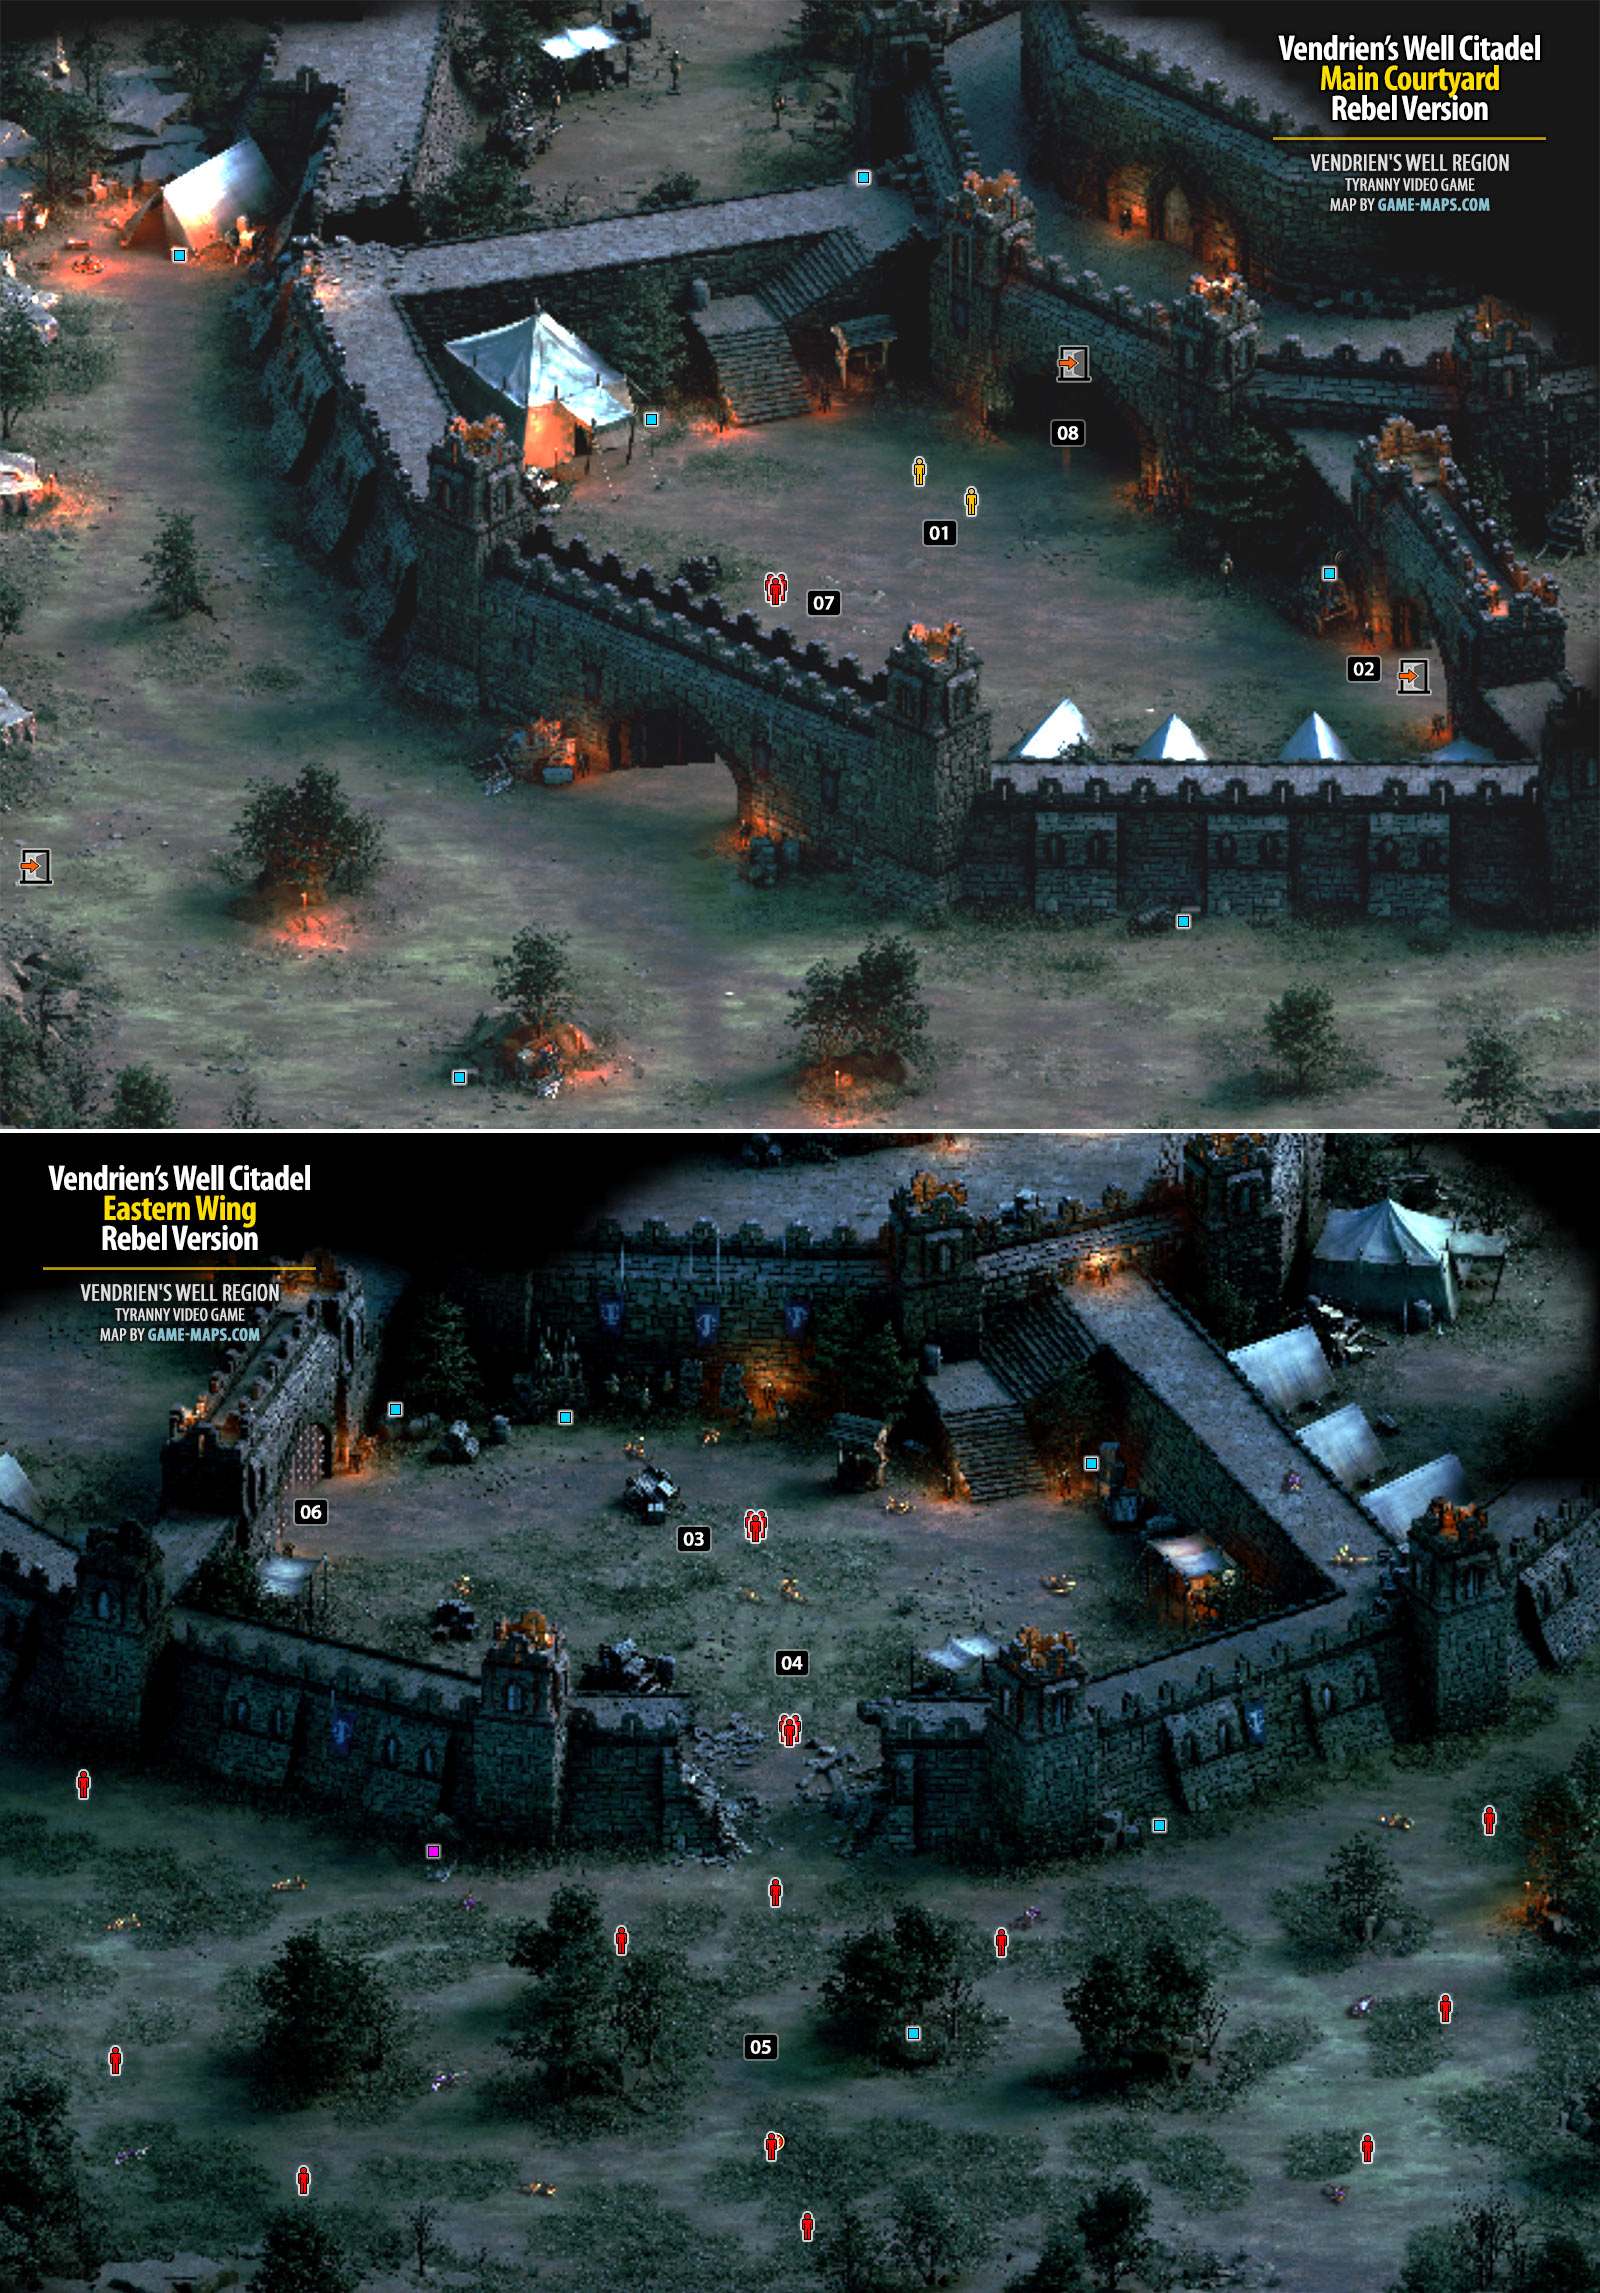 Vendrien's Well Citadel - Rebel Version, Tyranny Video Game